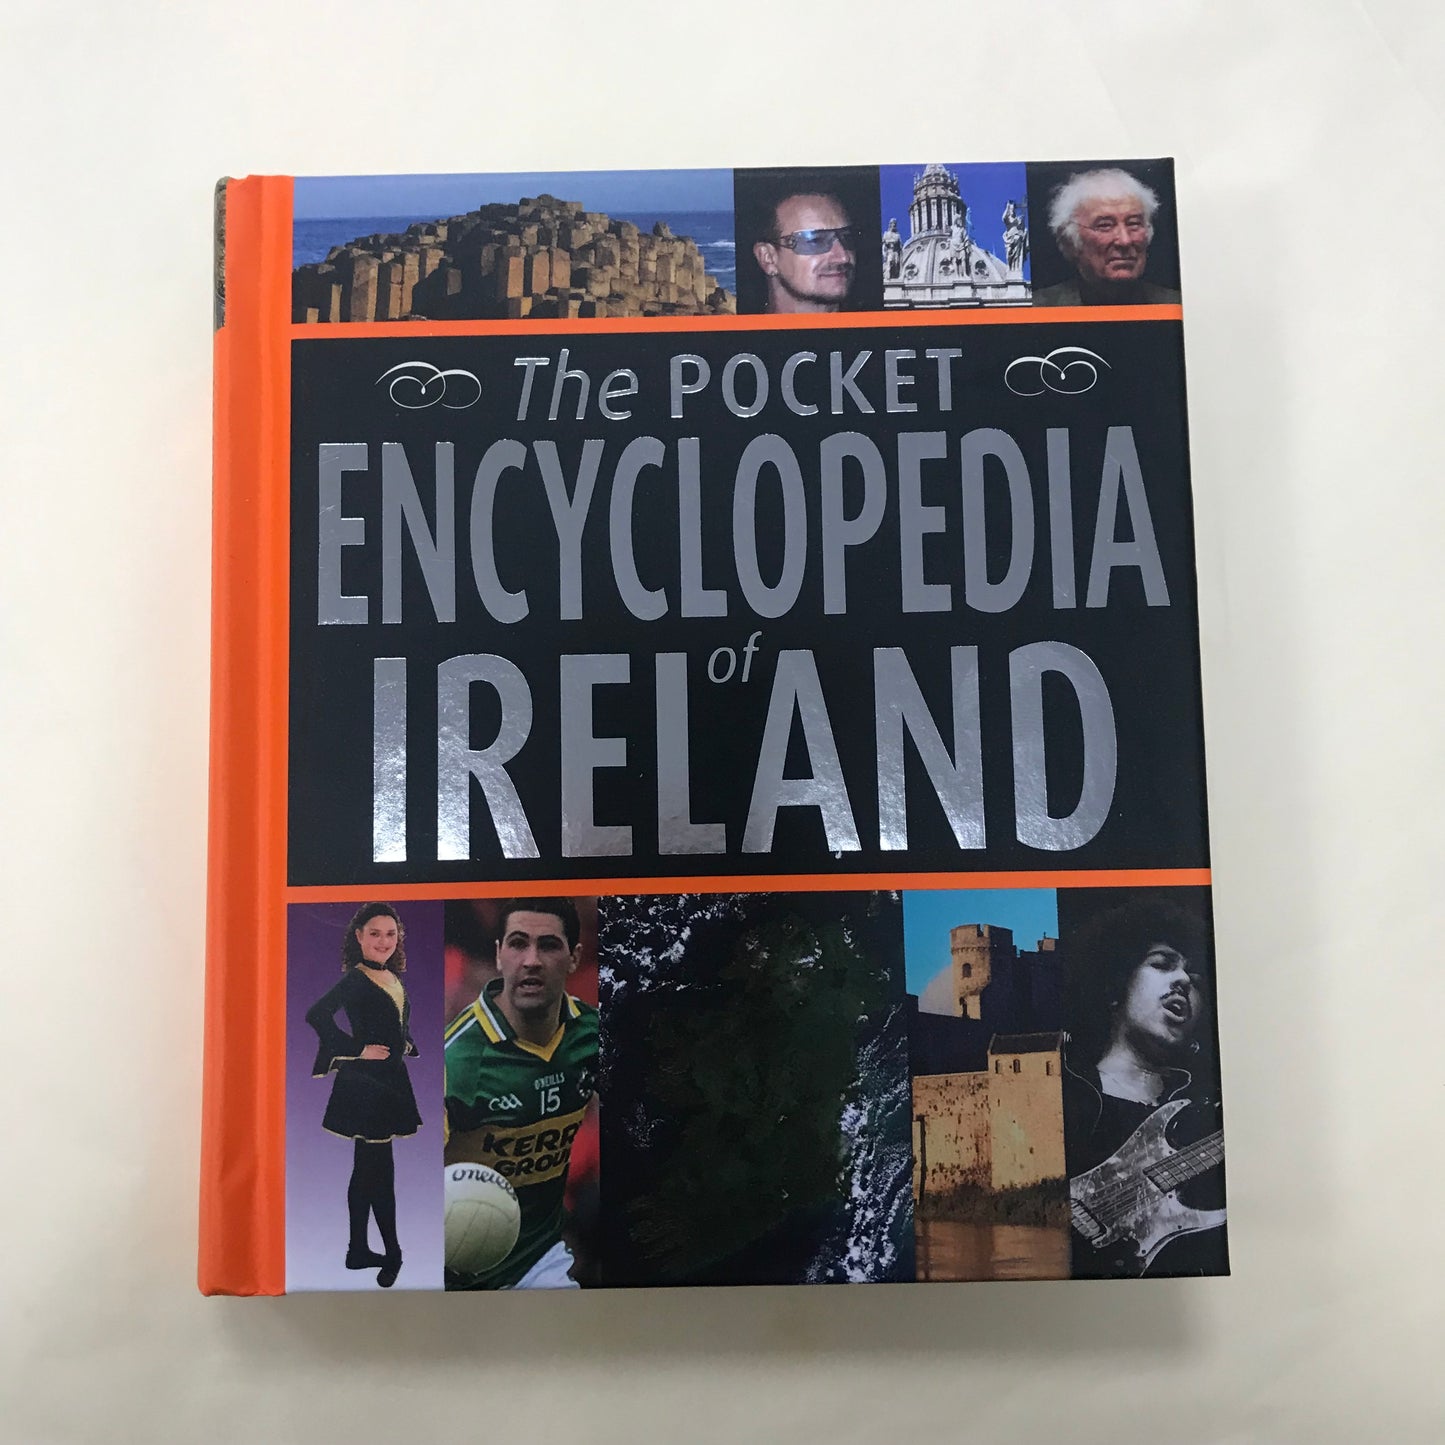 The Pocket Encyclopaedia of Ireland